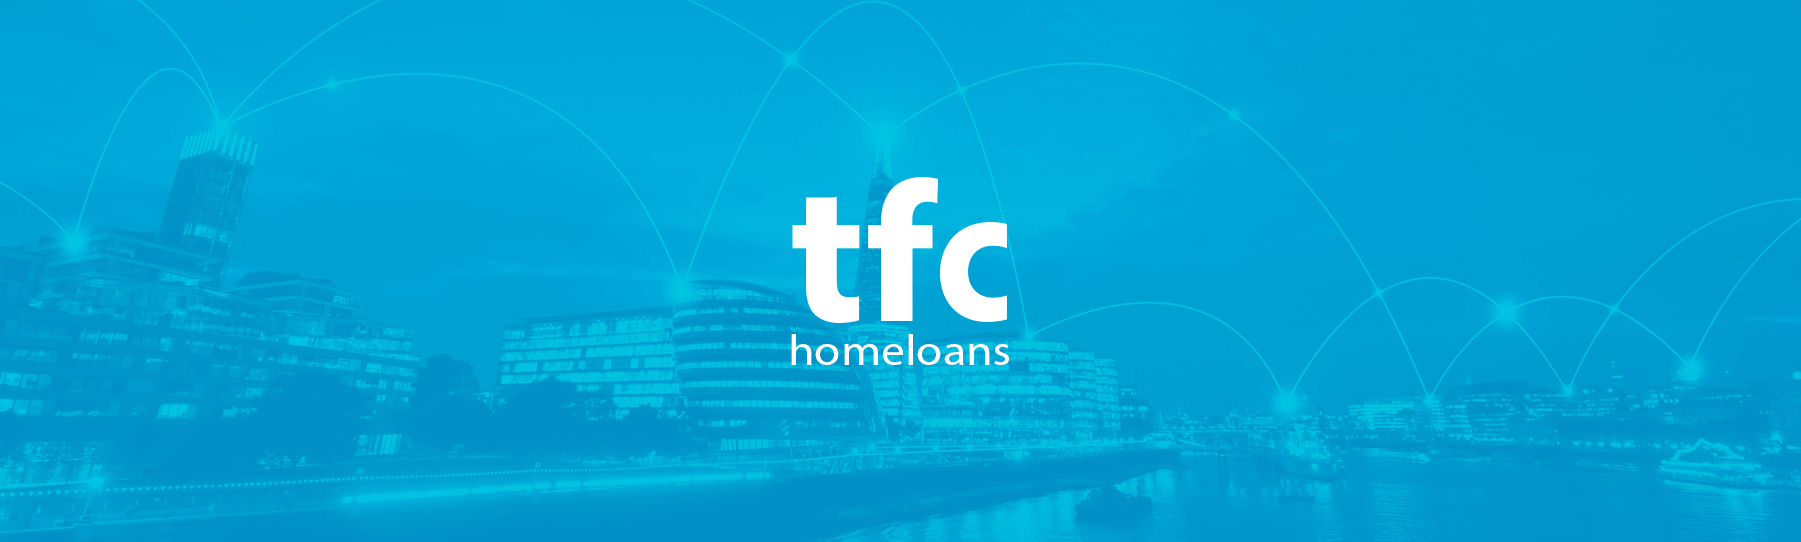 TFC homeloans